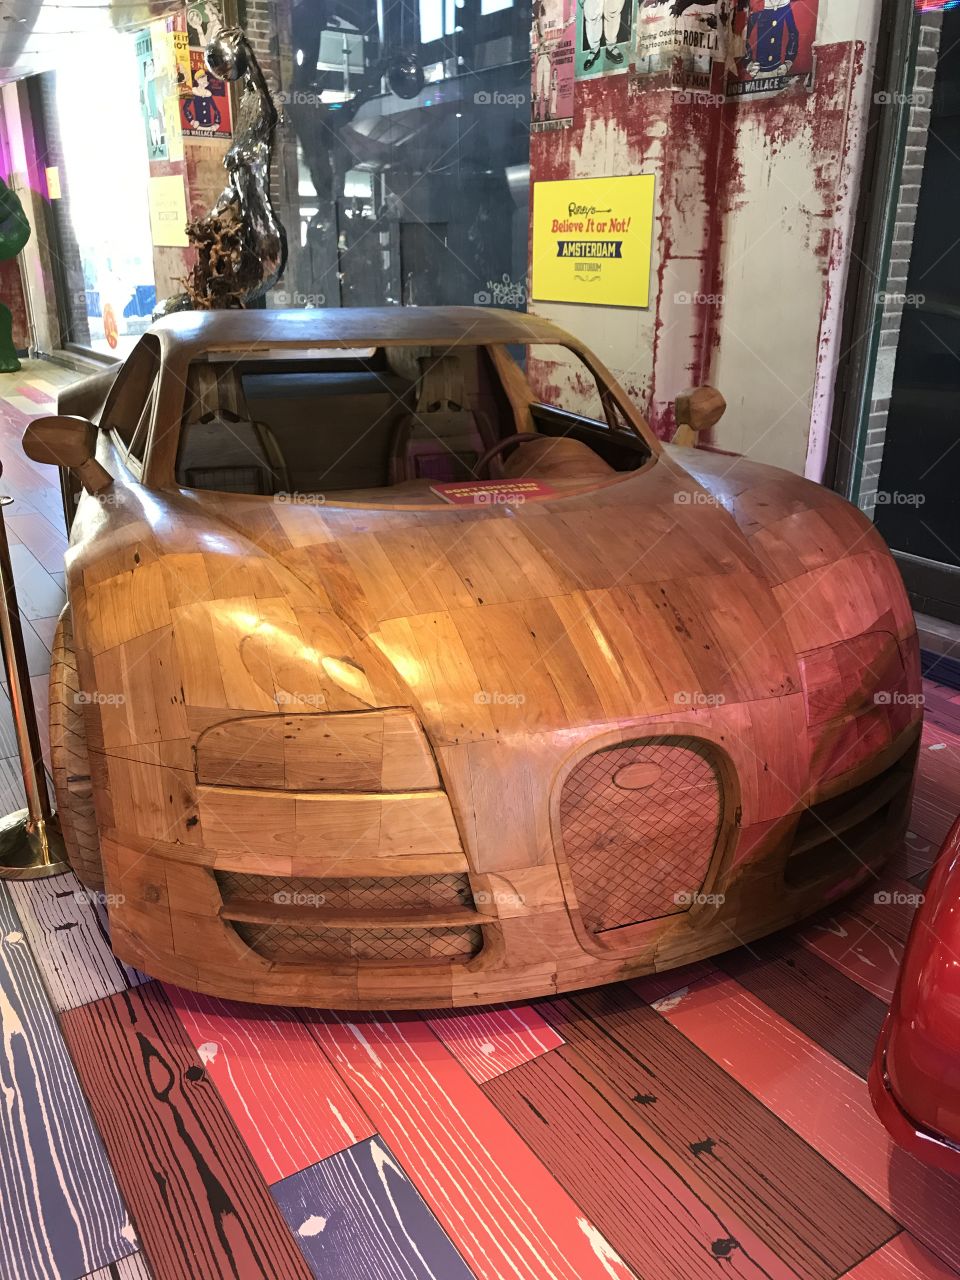 Wooden
Car
